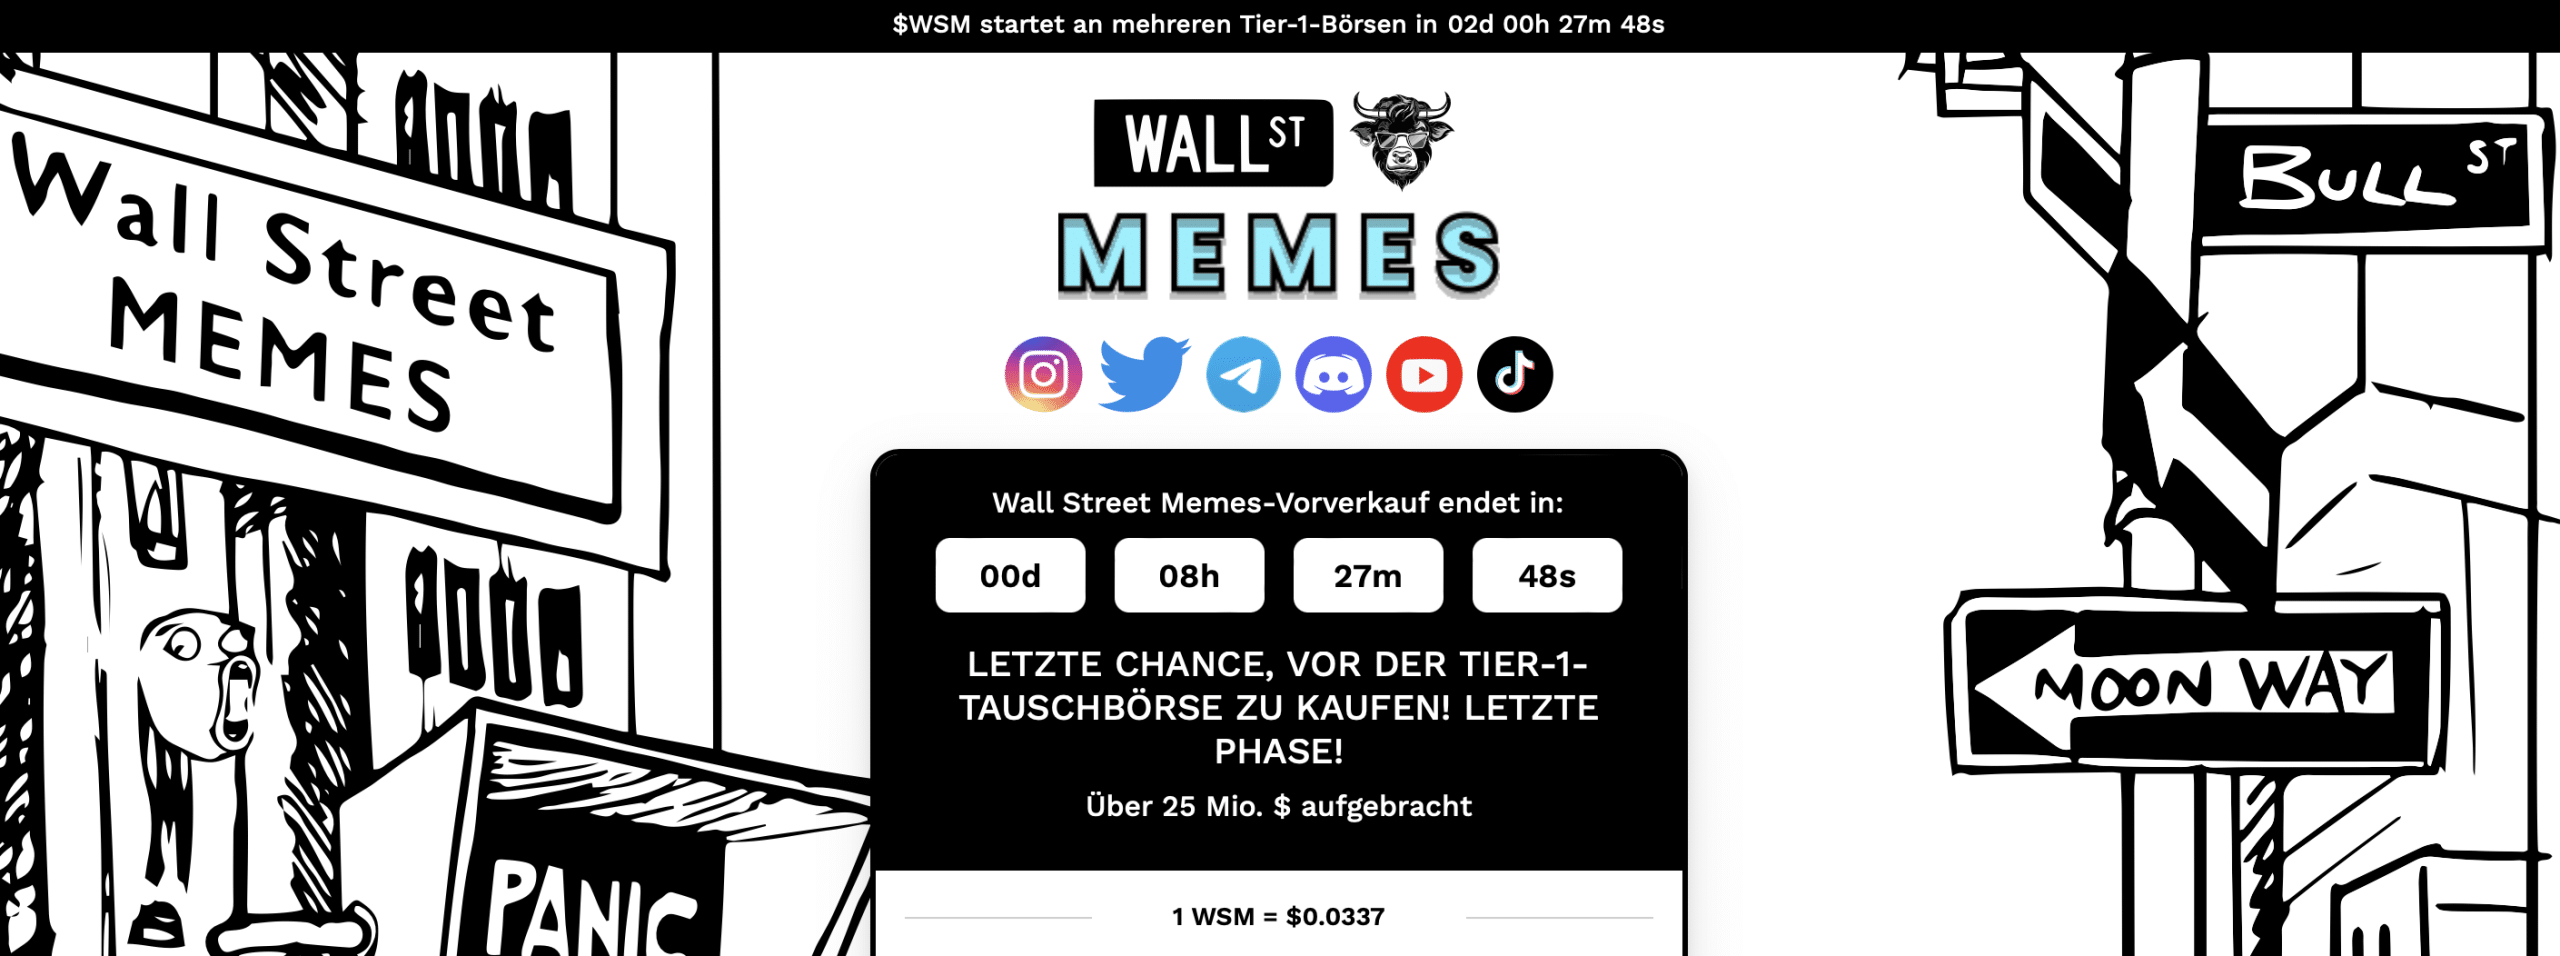 Wall Street Memes Countdown